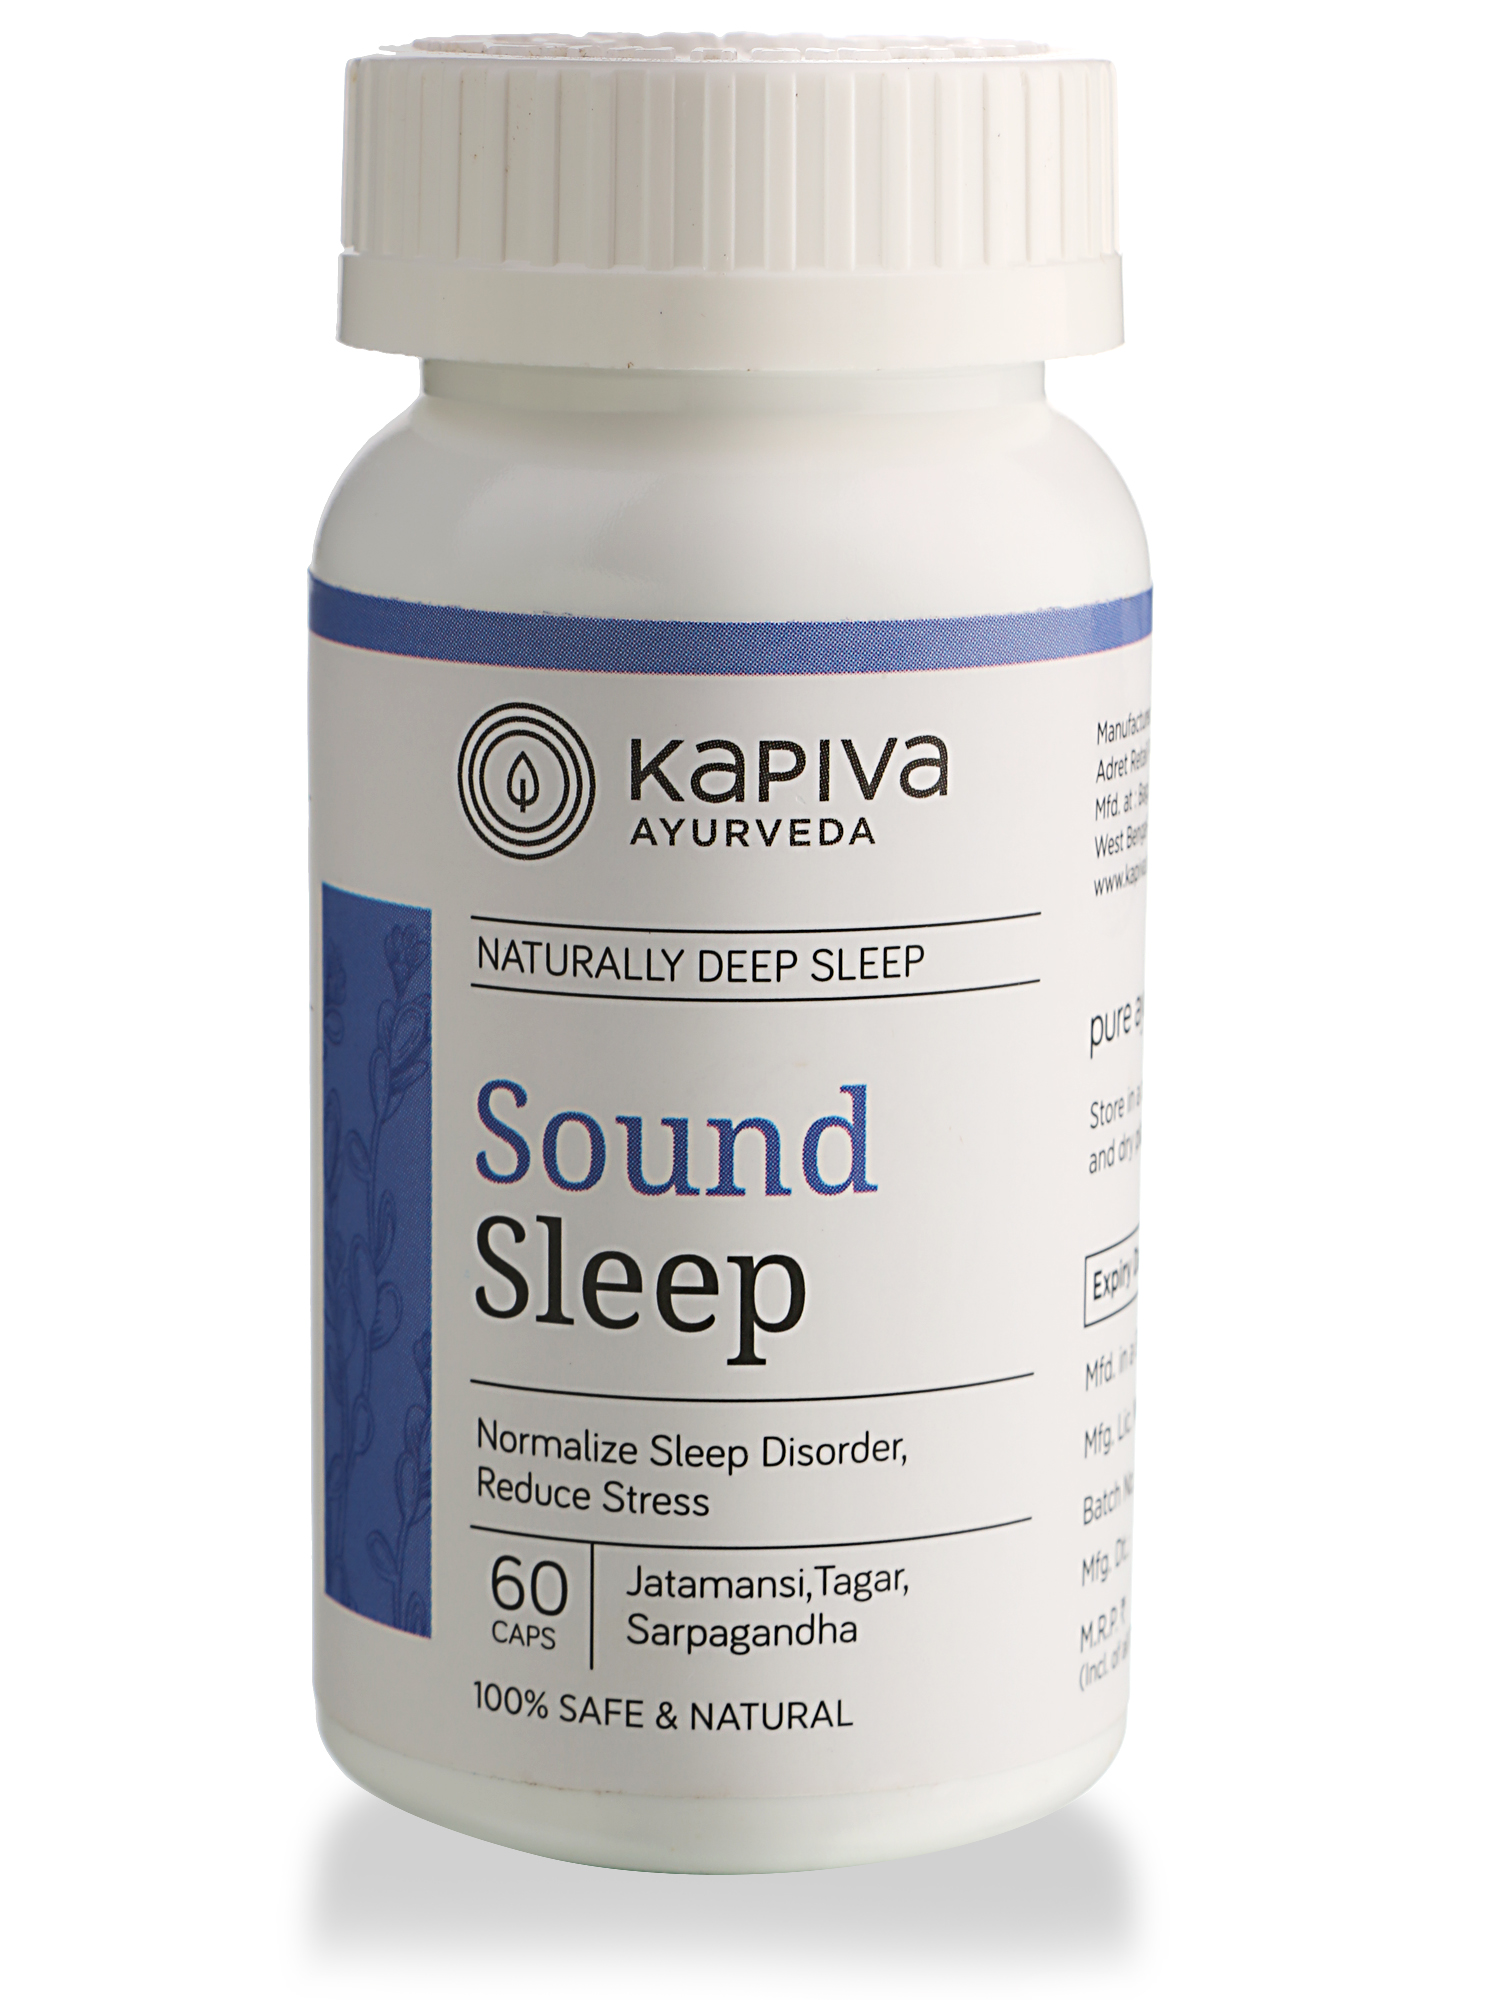 Buy Kapiva Sound Sleep Capsules at Best Price Online